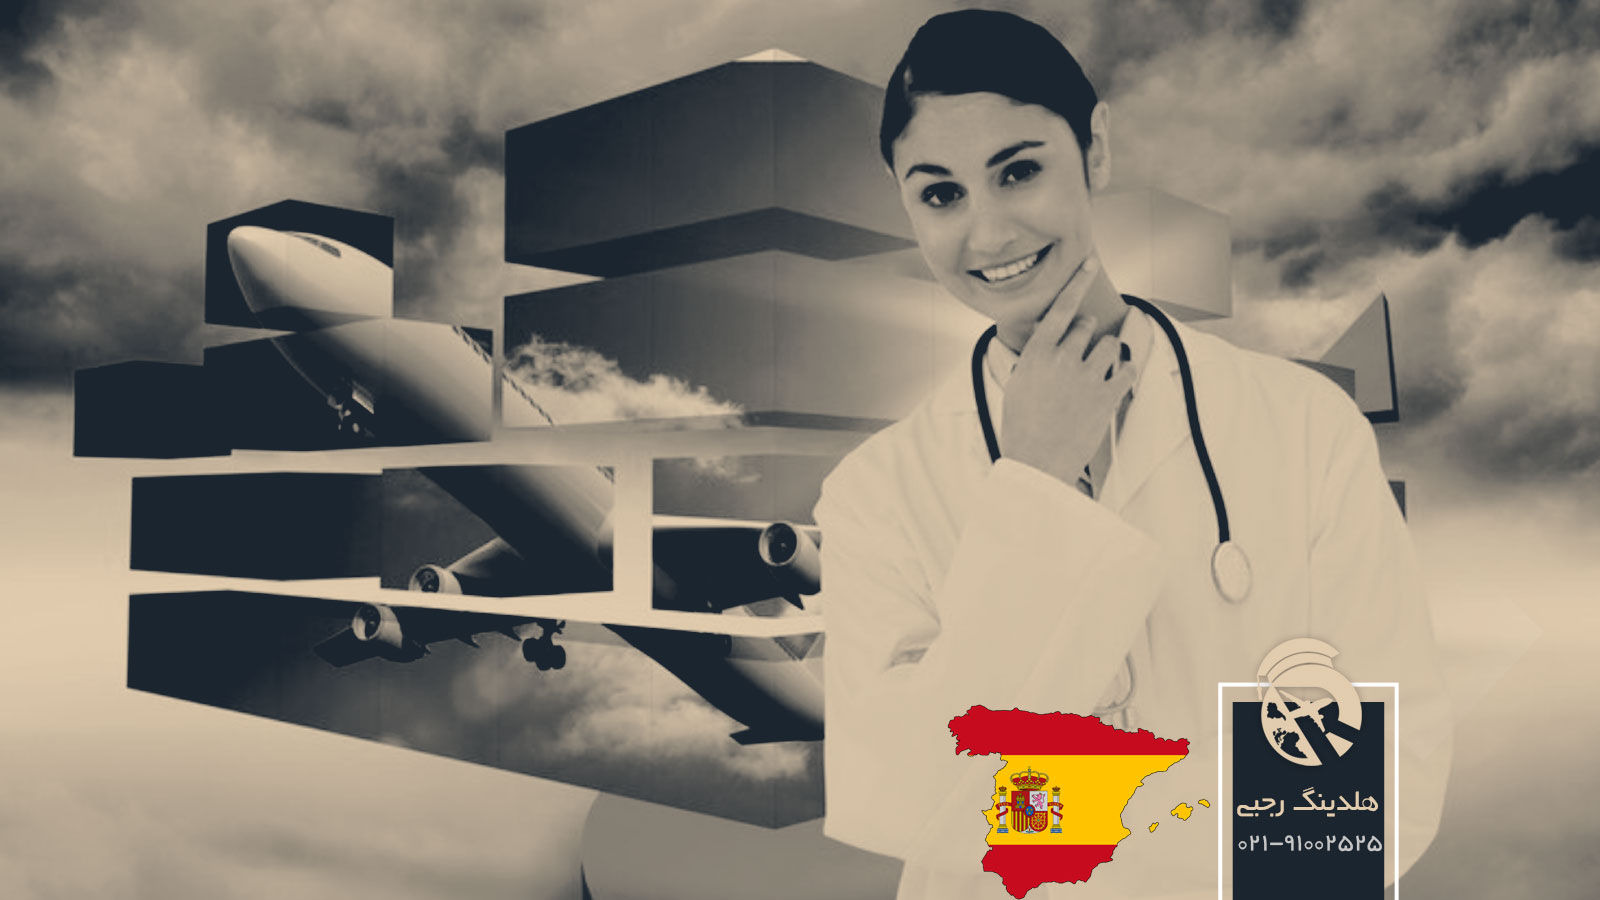 مهاجرت پزشکان به اسپانیا